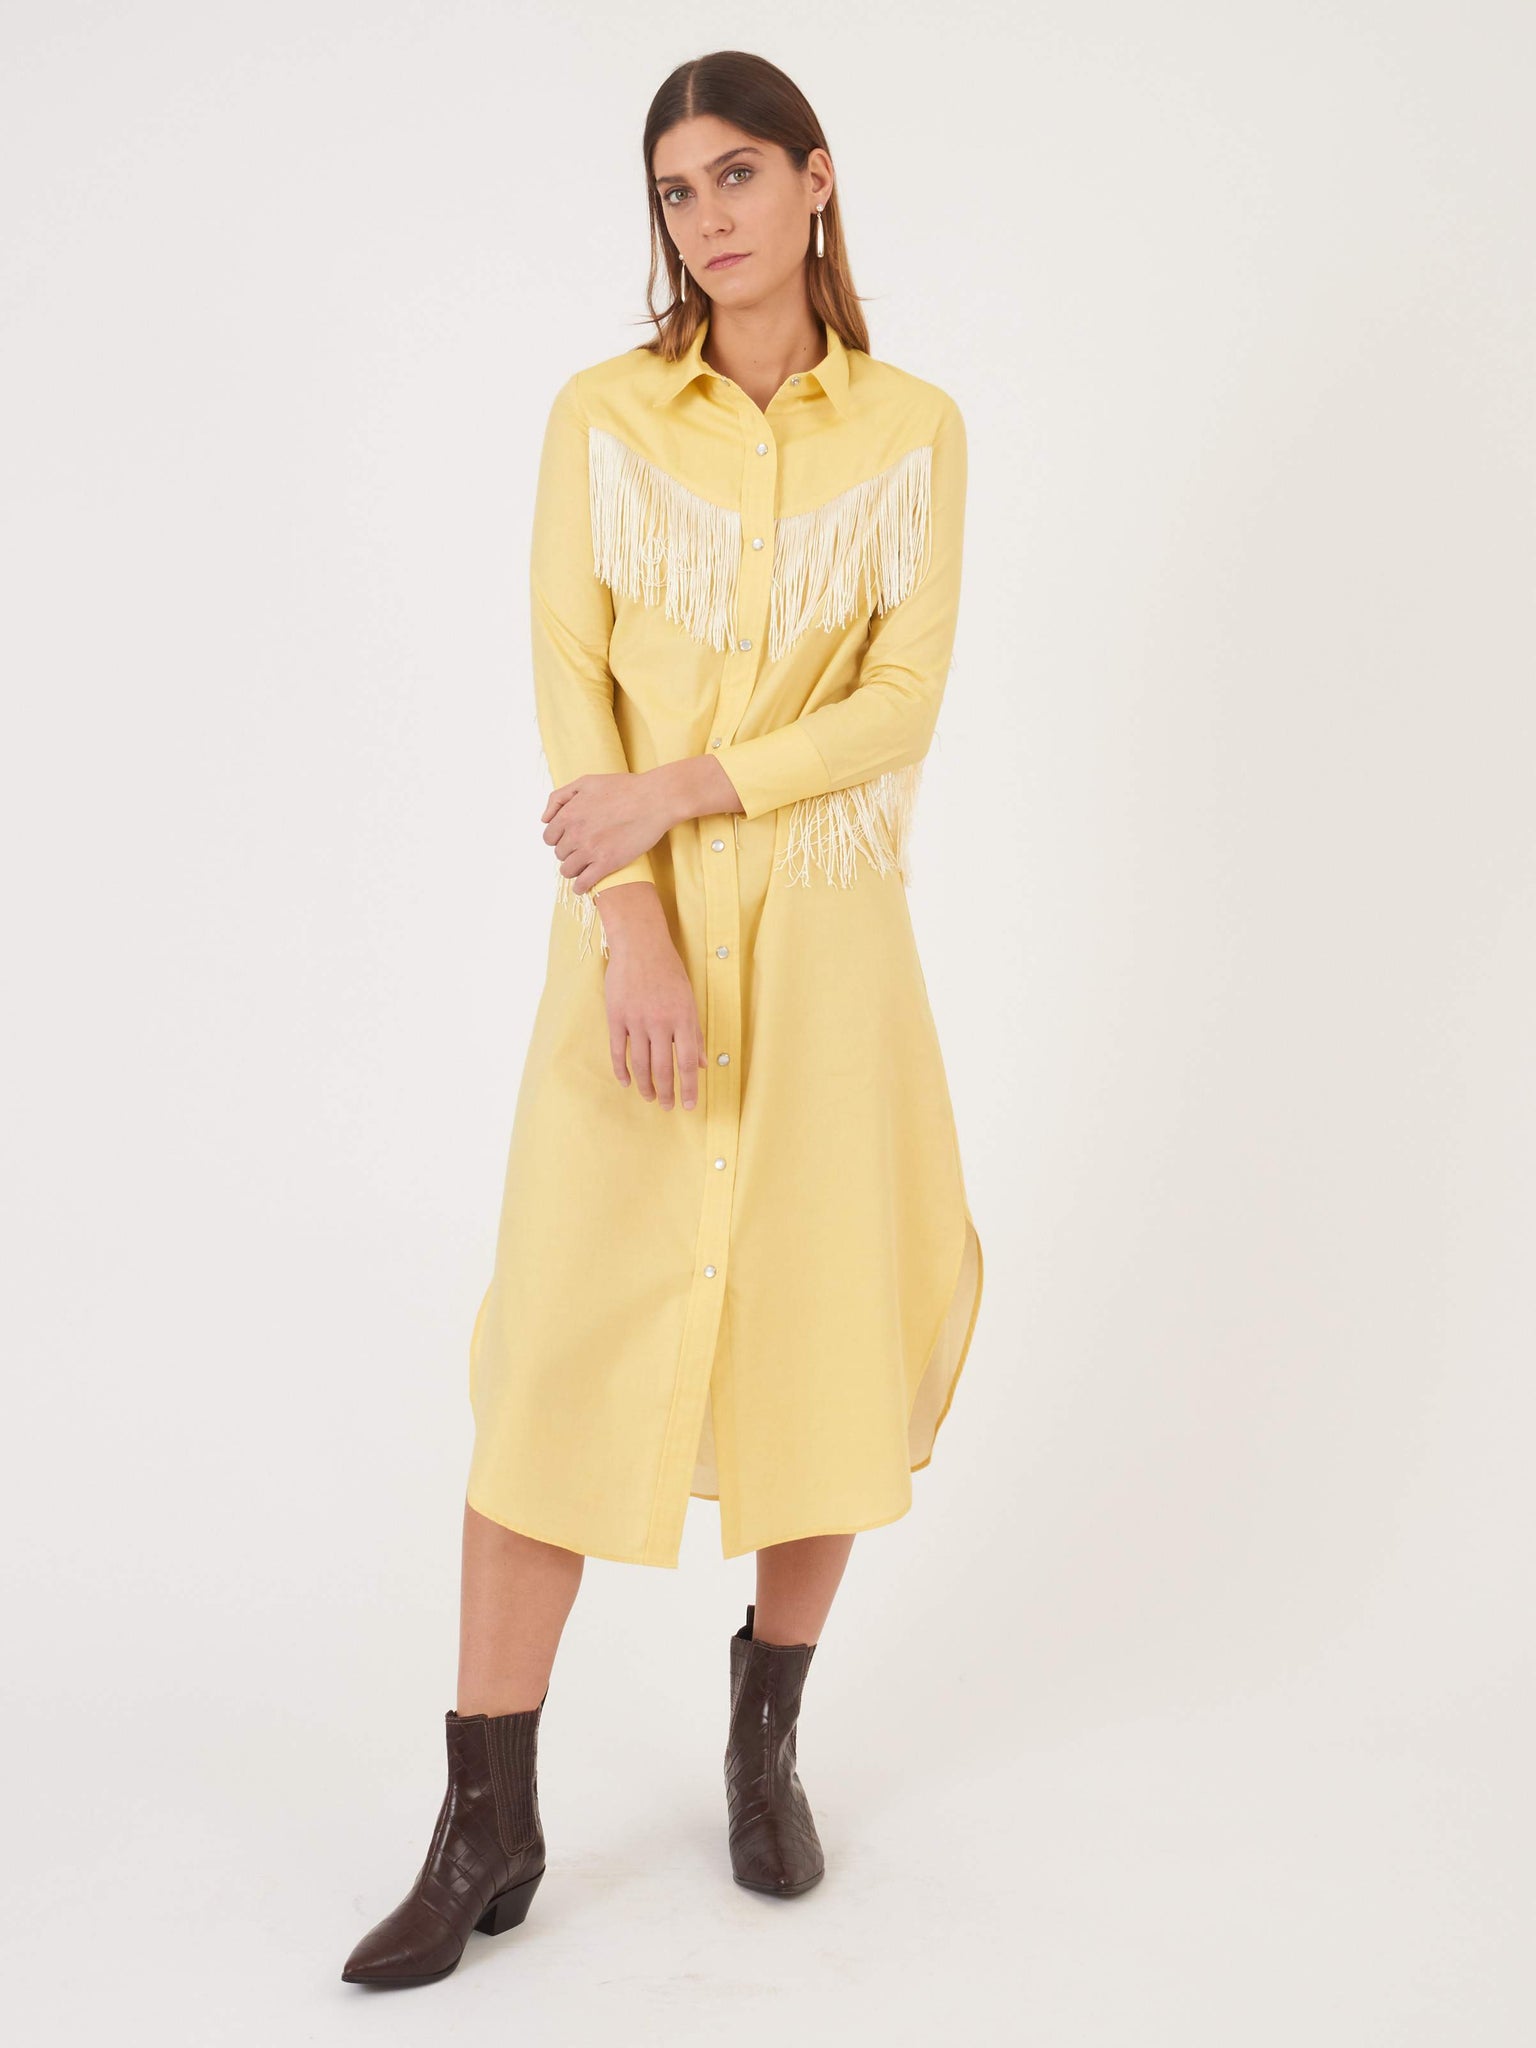 fringe dress yellow